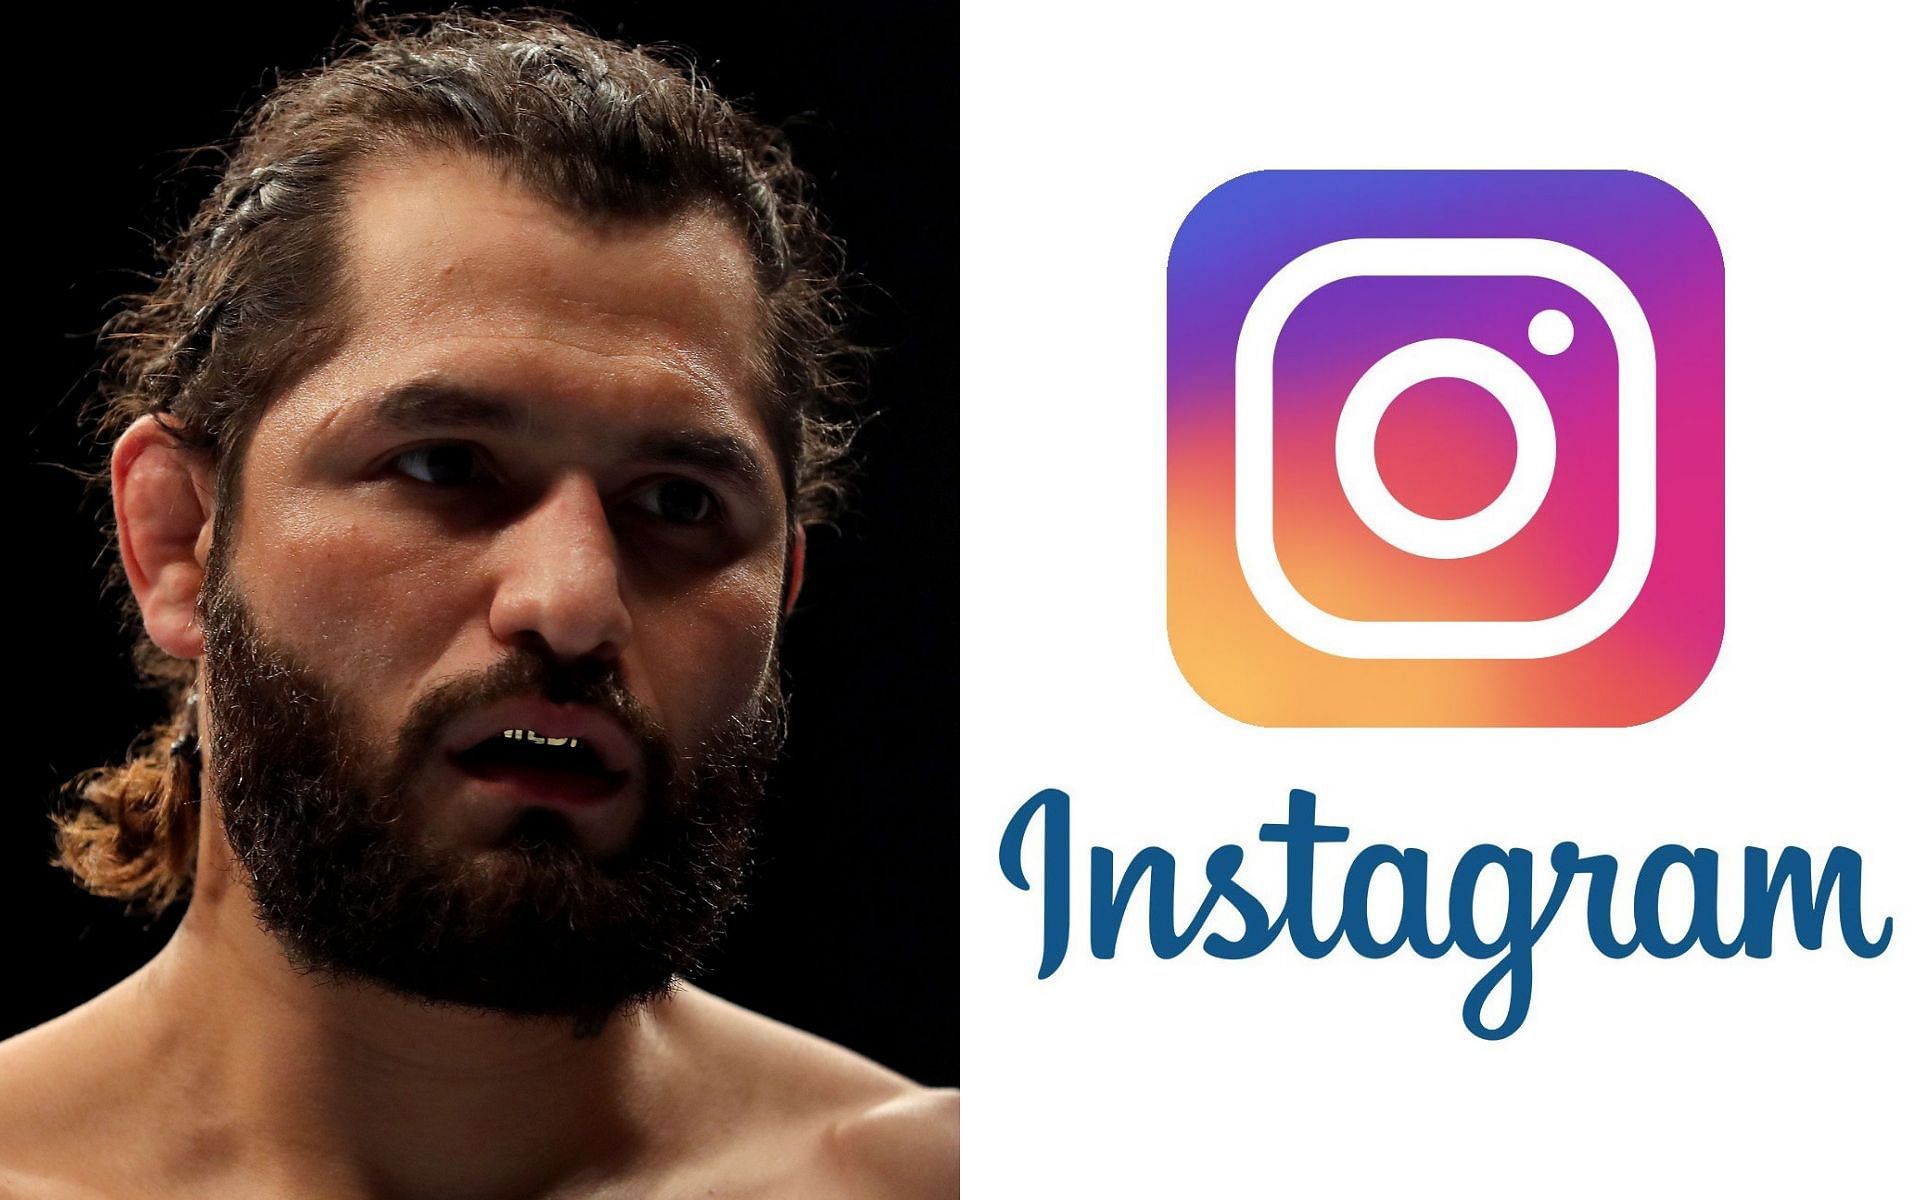 Jorge Masvidal expresses his disdain for Instagram